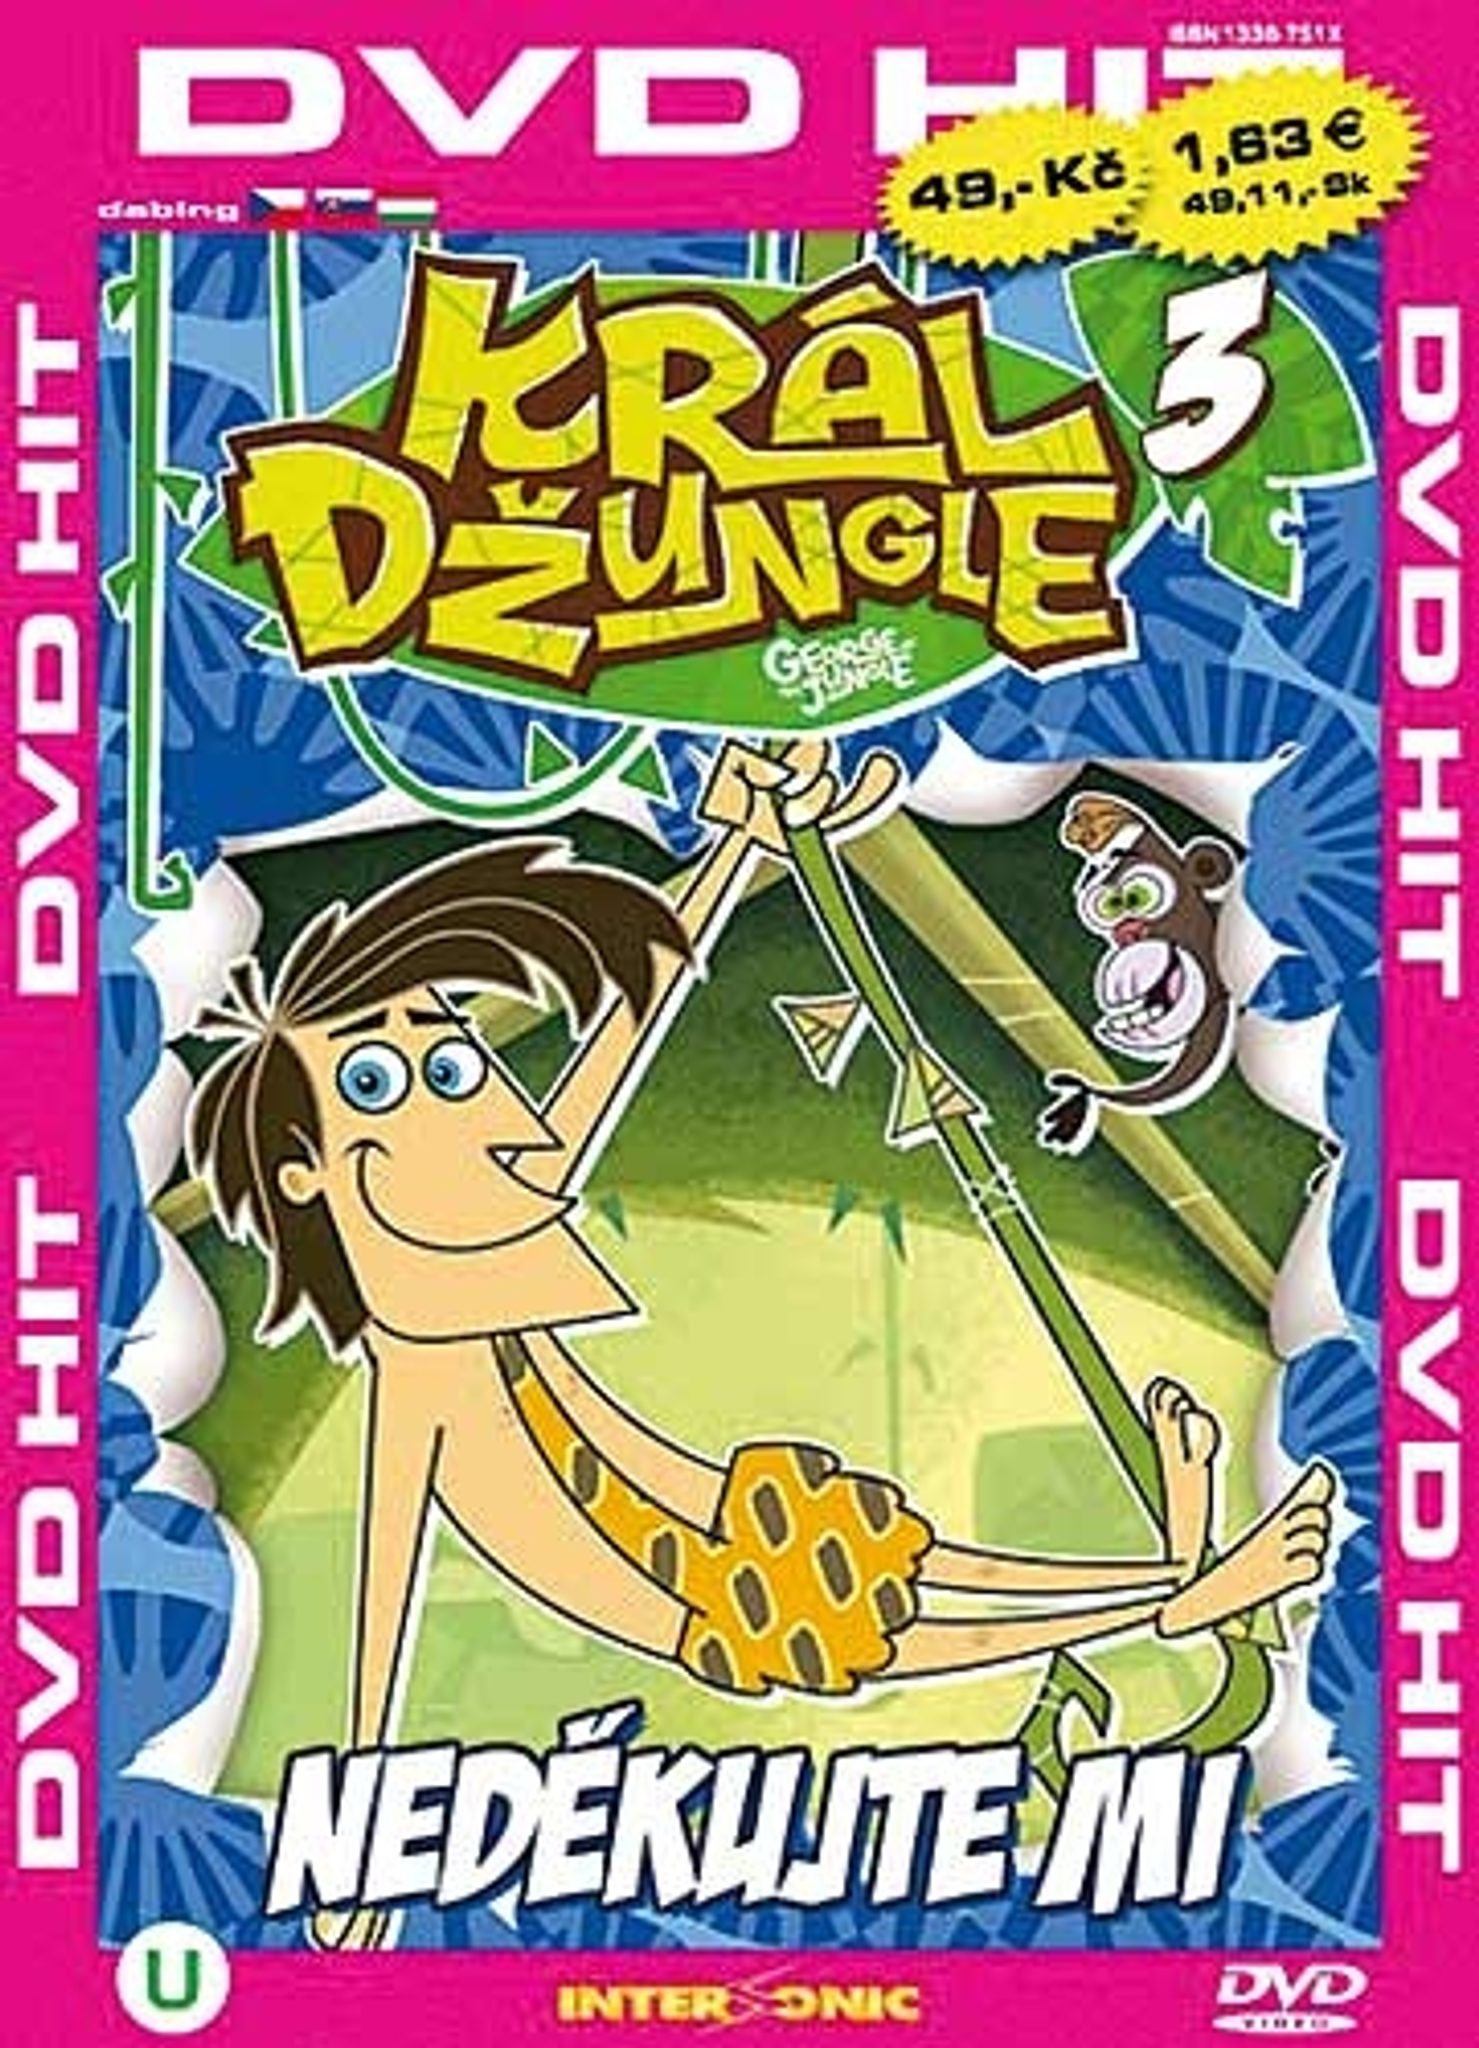 DVD Krl dungle 4